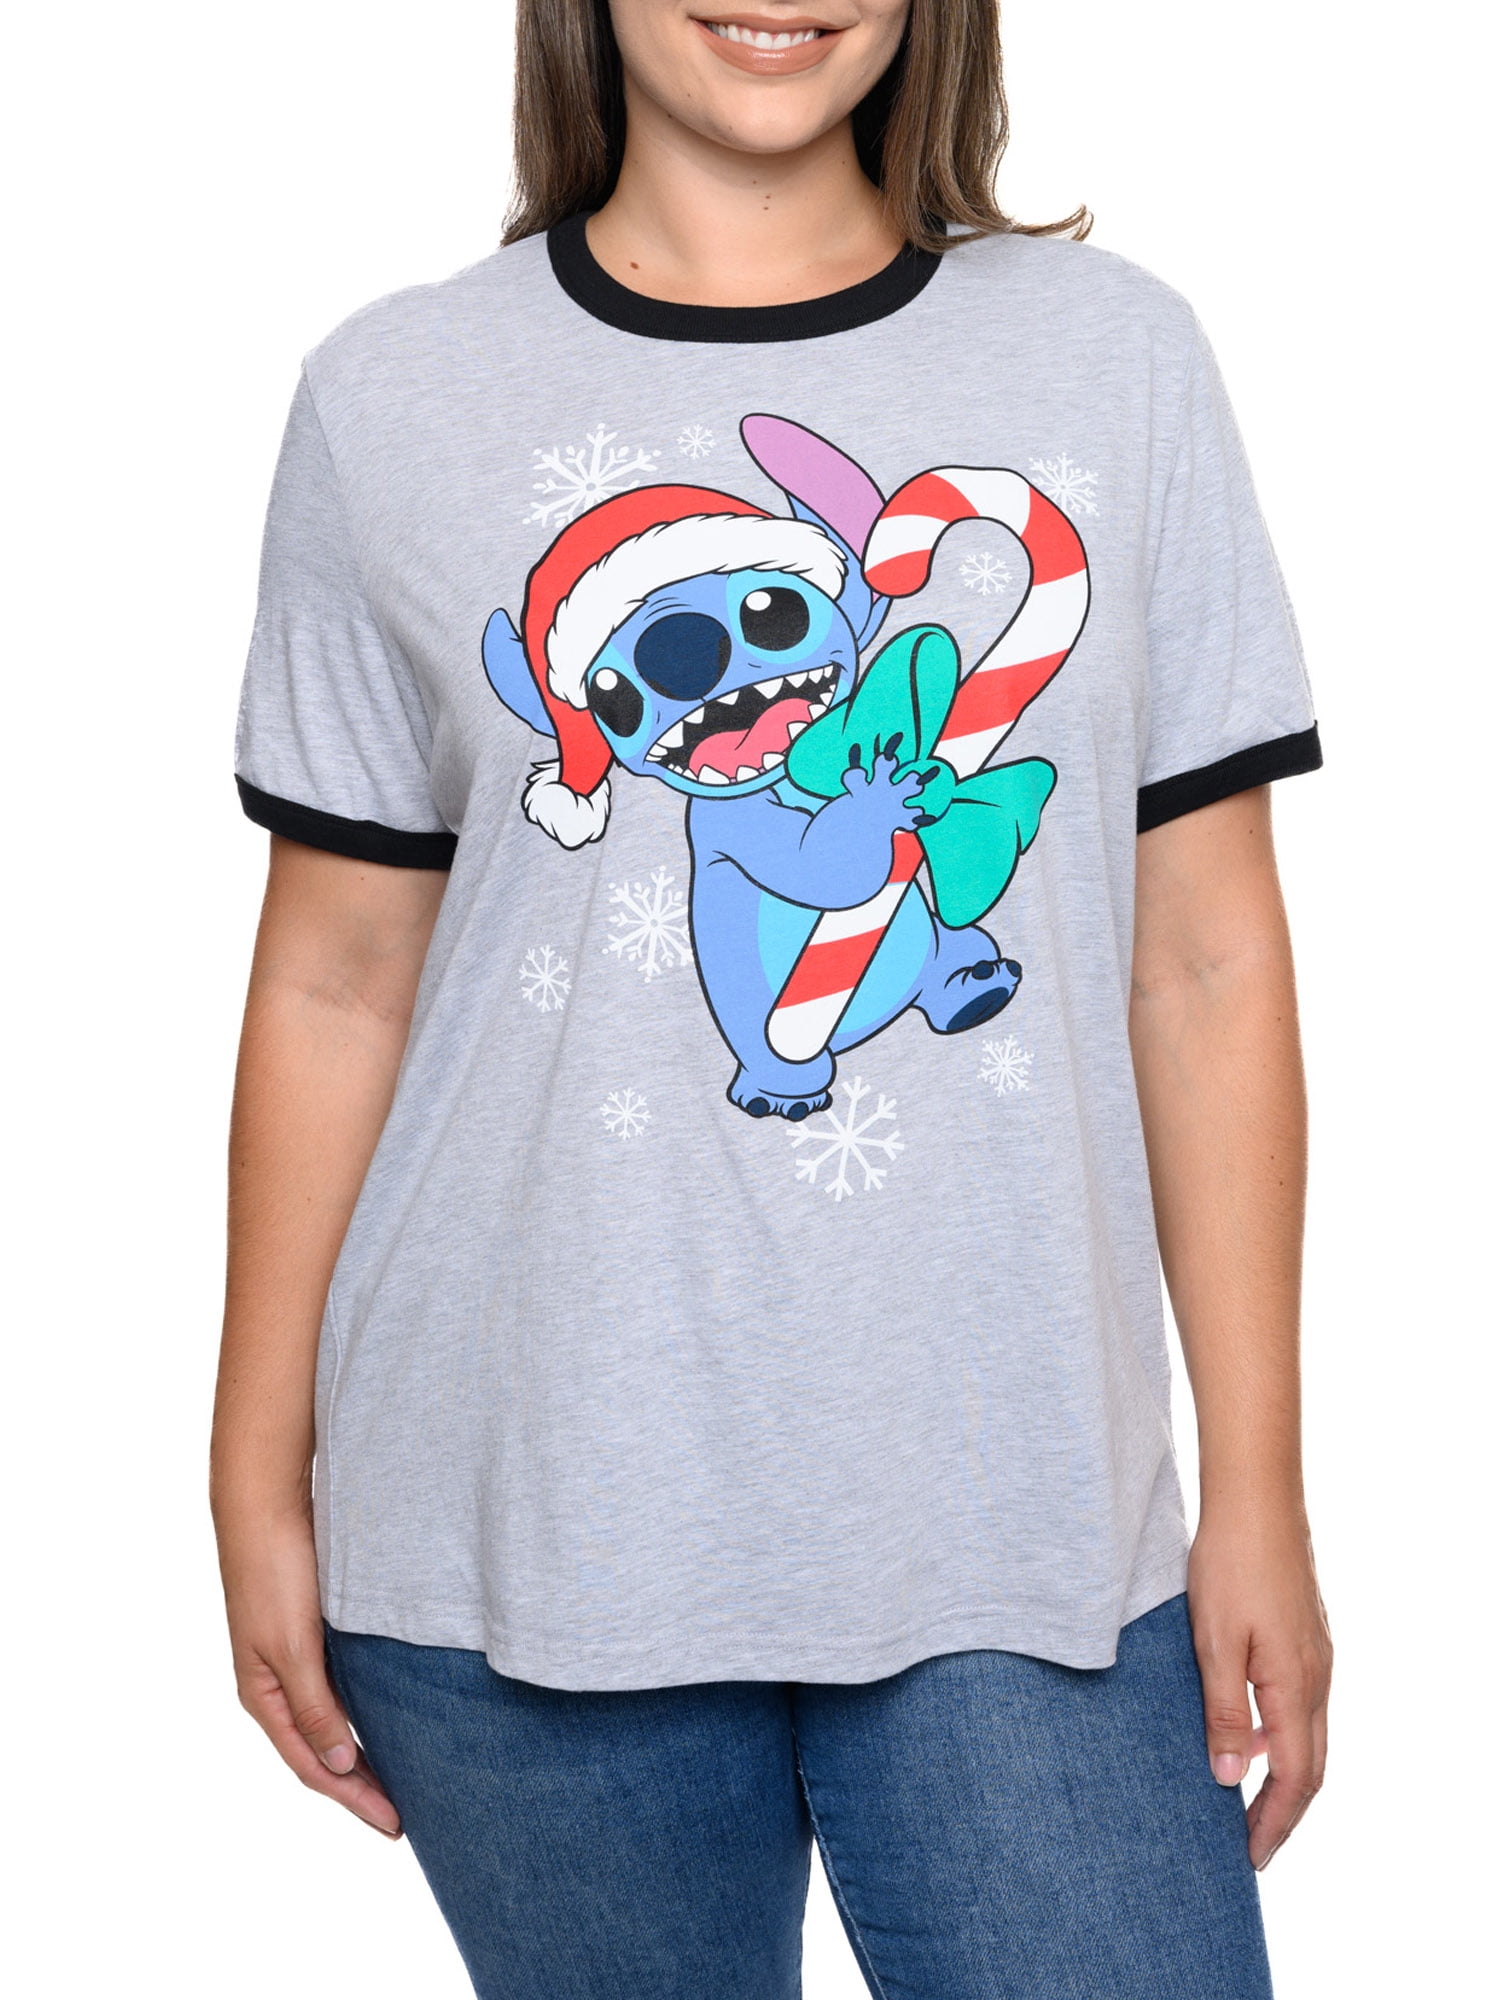 Stitch Christmas T-Shirt Holiday Ringer Women's Plus Size Disney Gray